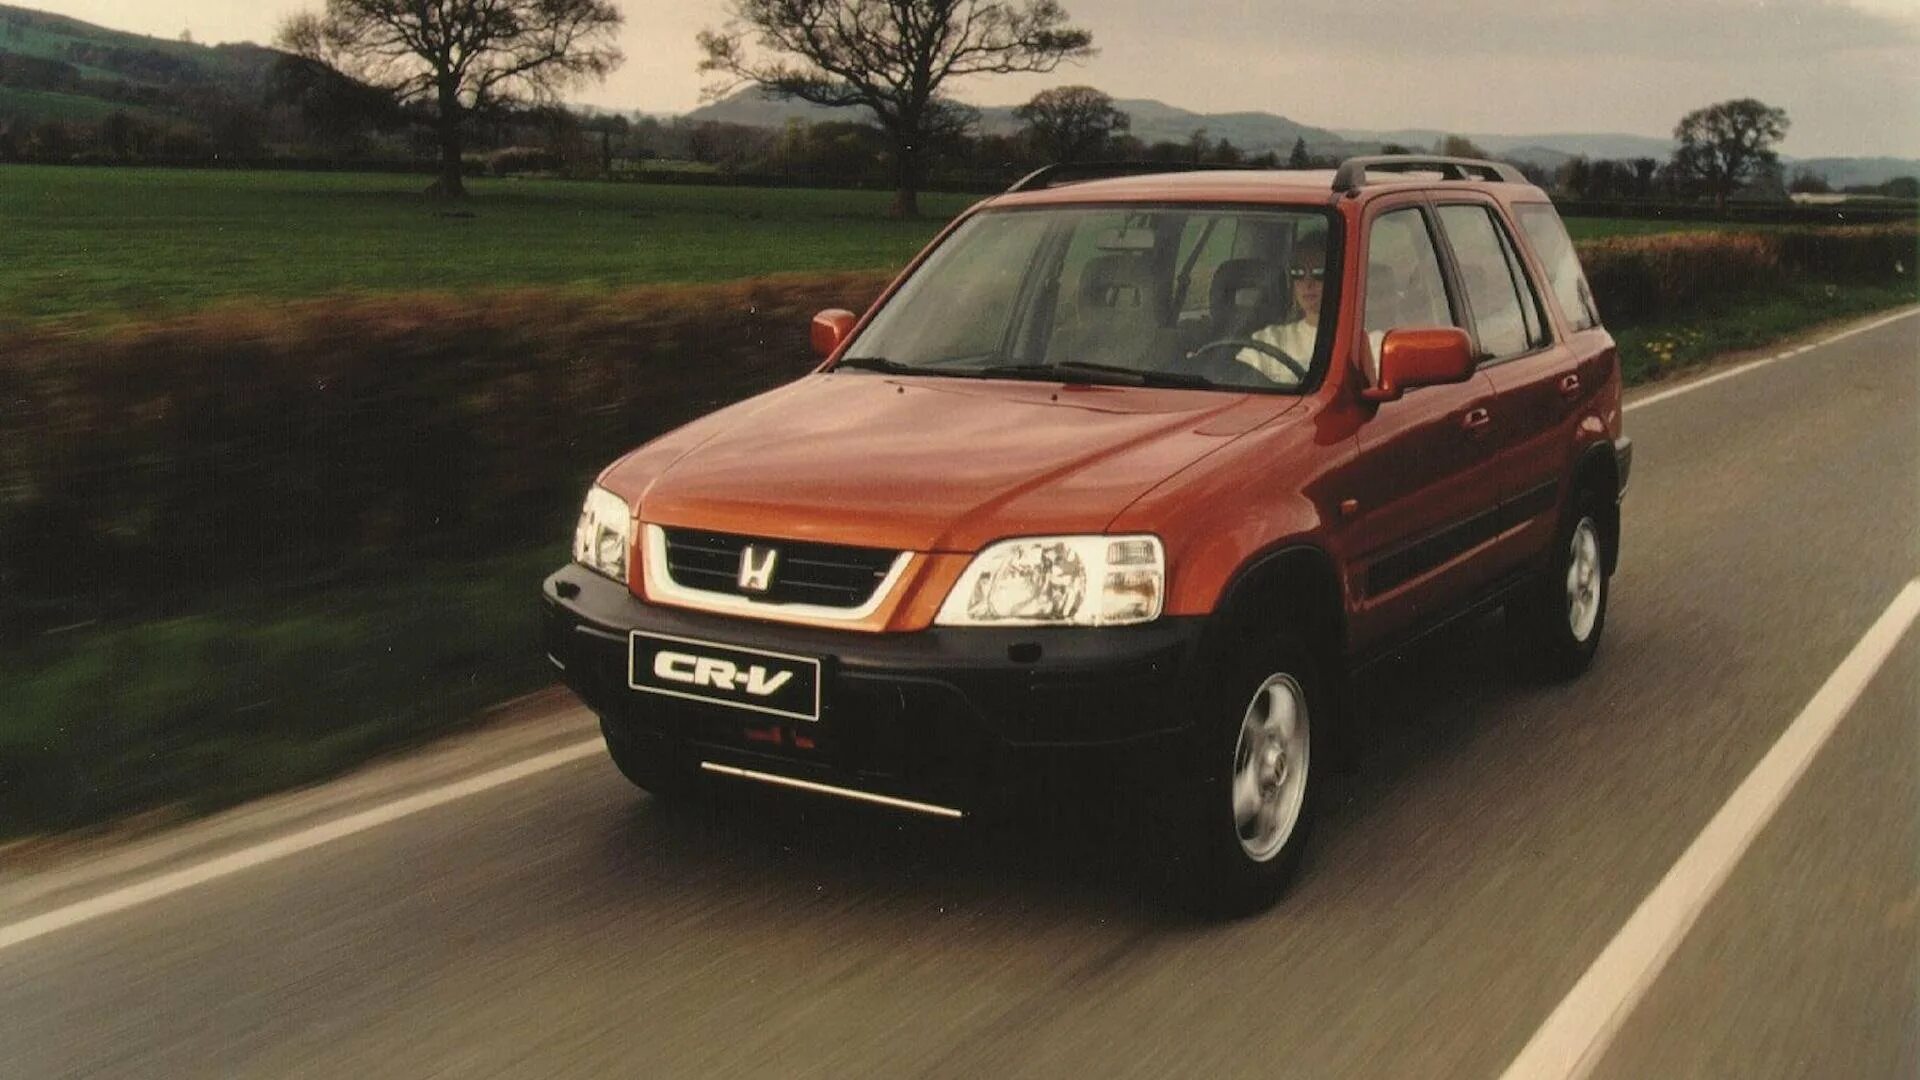 Honda CR-V 1995. Honda CRV 1995. Хонда СРВ 1 поколения. Хонда CRV Rd 1 поколение. Honda crv 1 купить